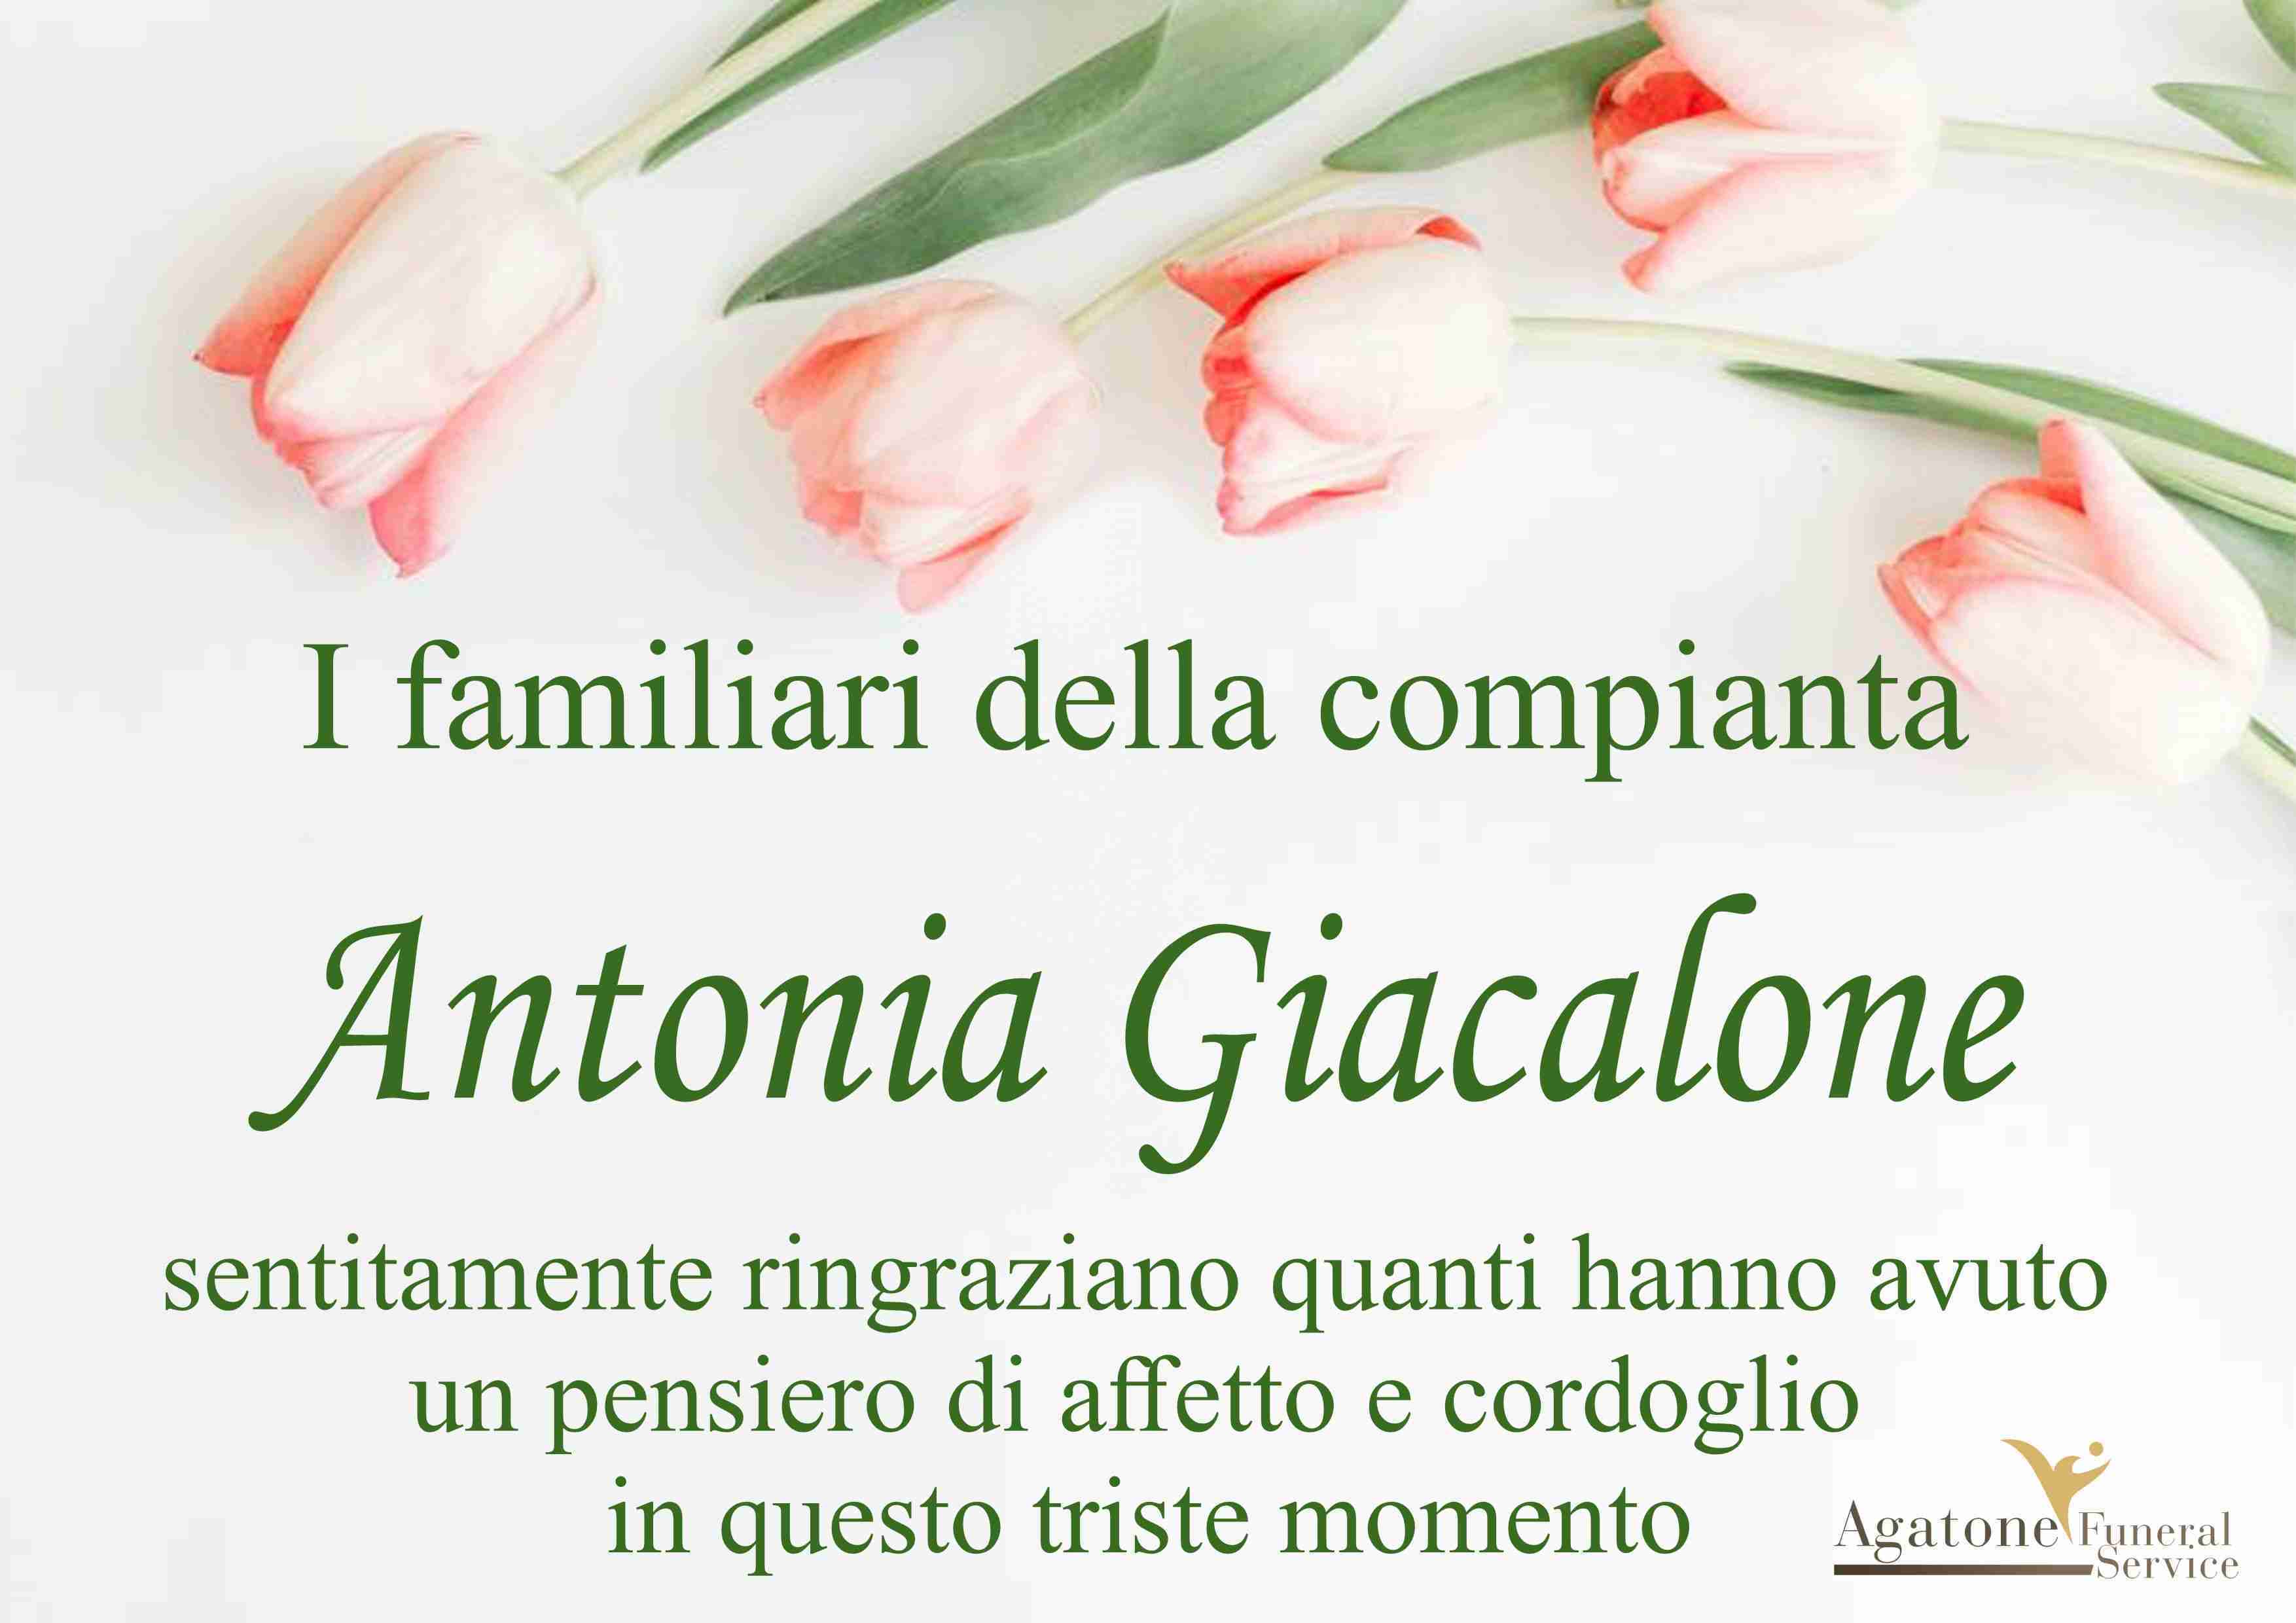 Antonia Giacalone